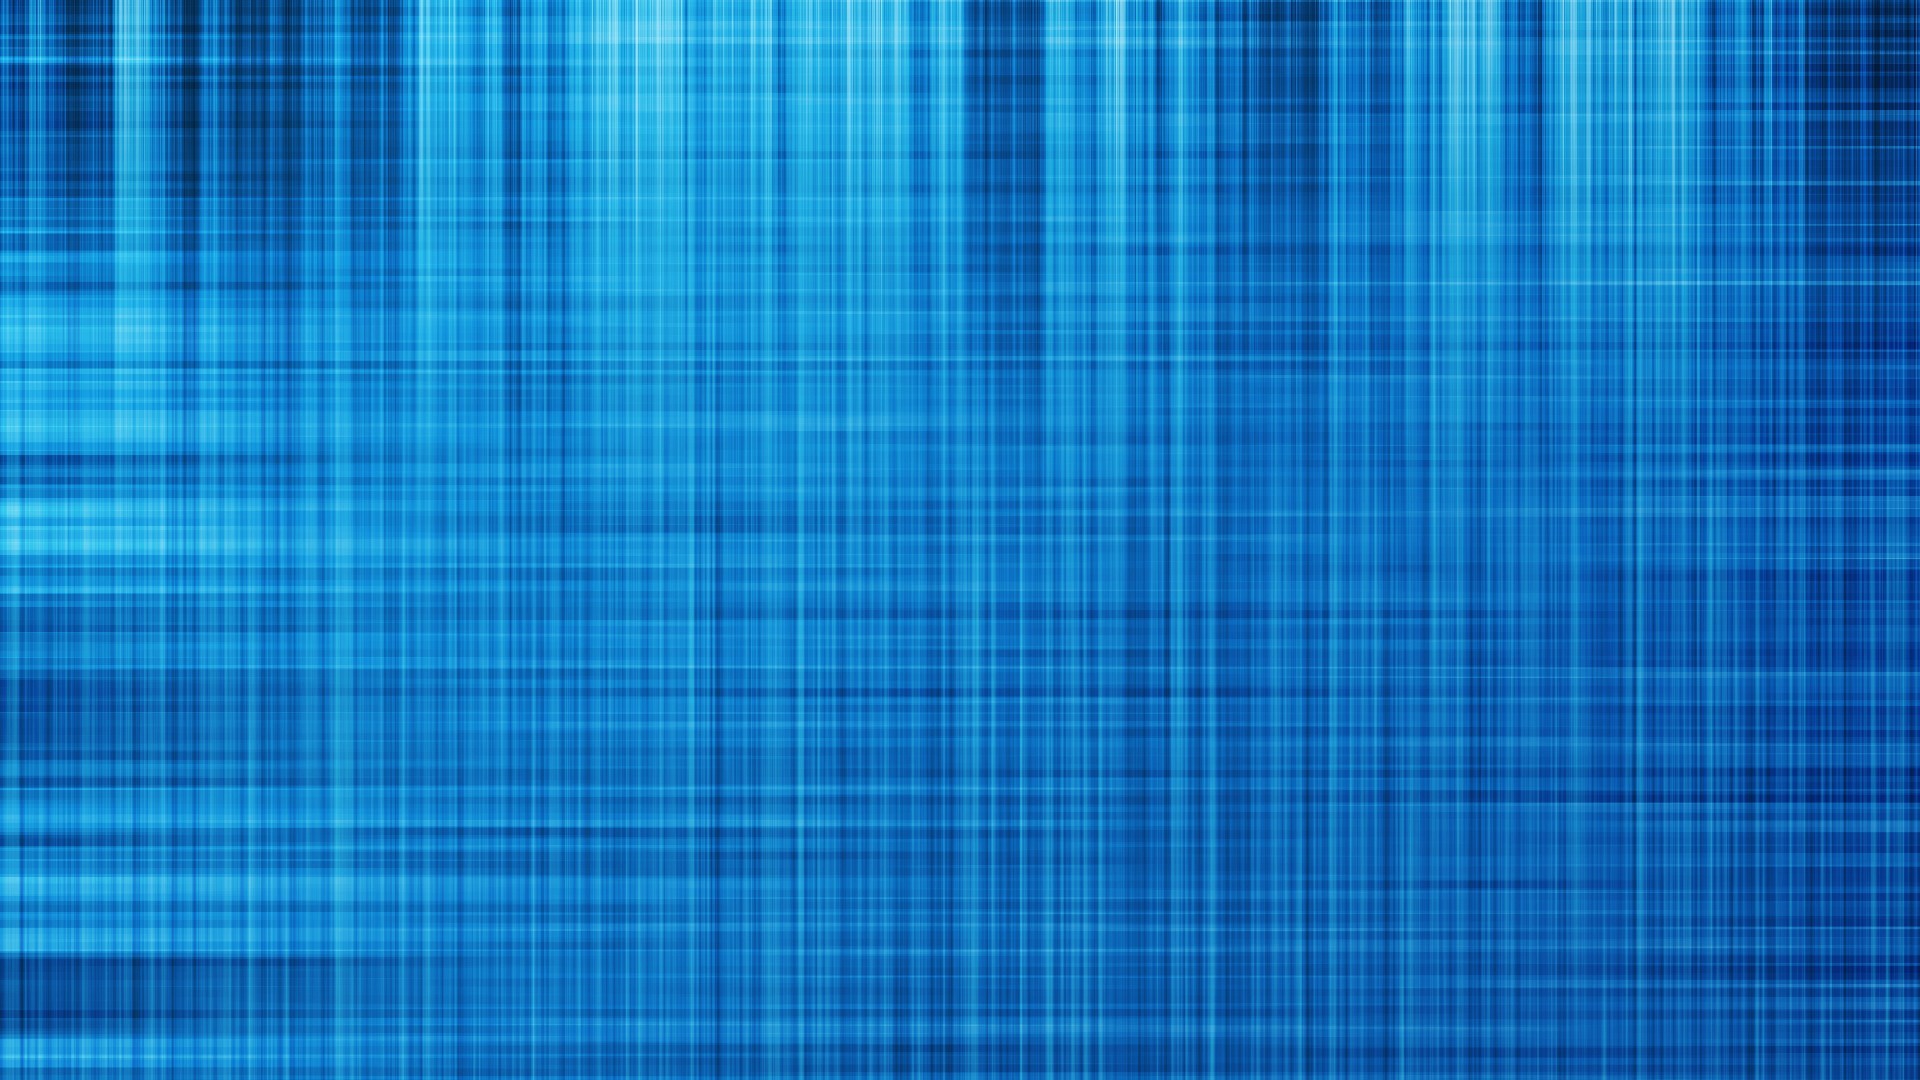 1920x1080 Blue Texture Wallpaper - WallpaperSafari